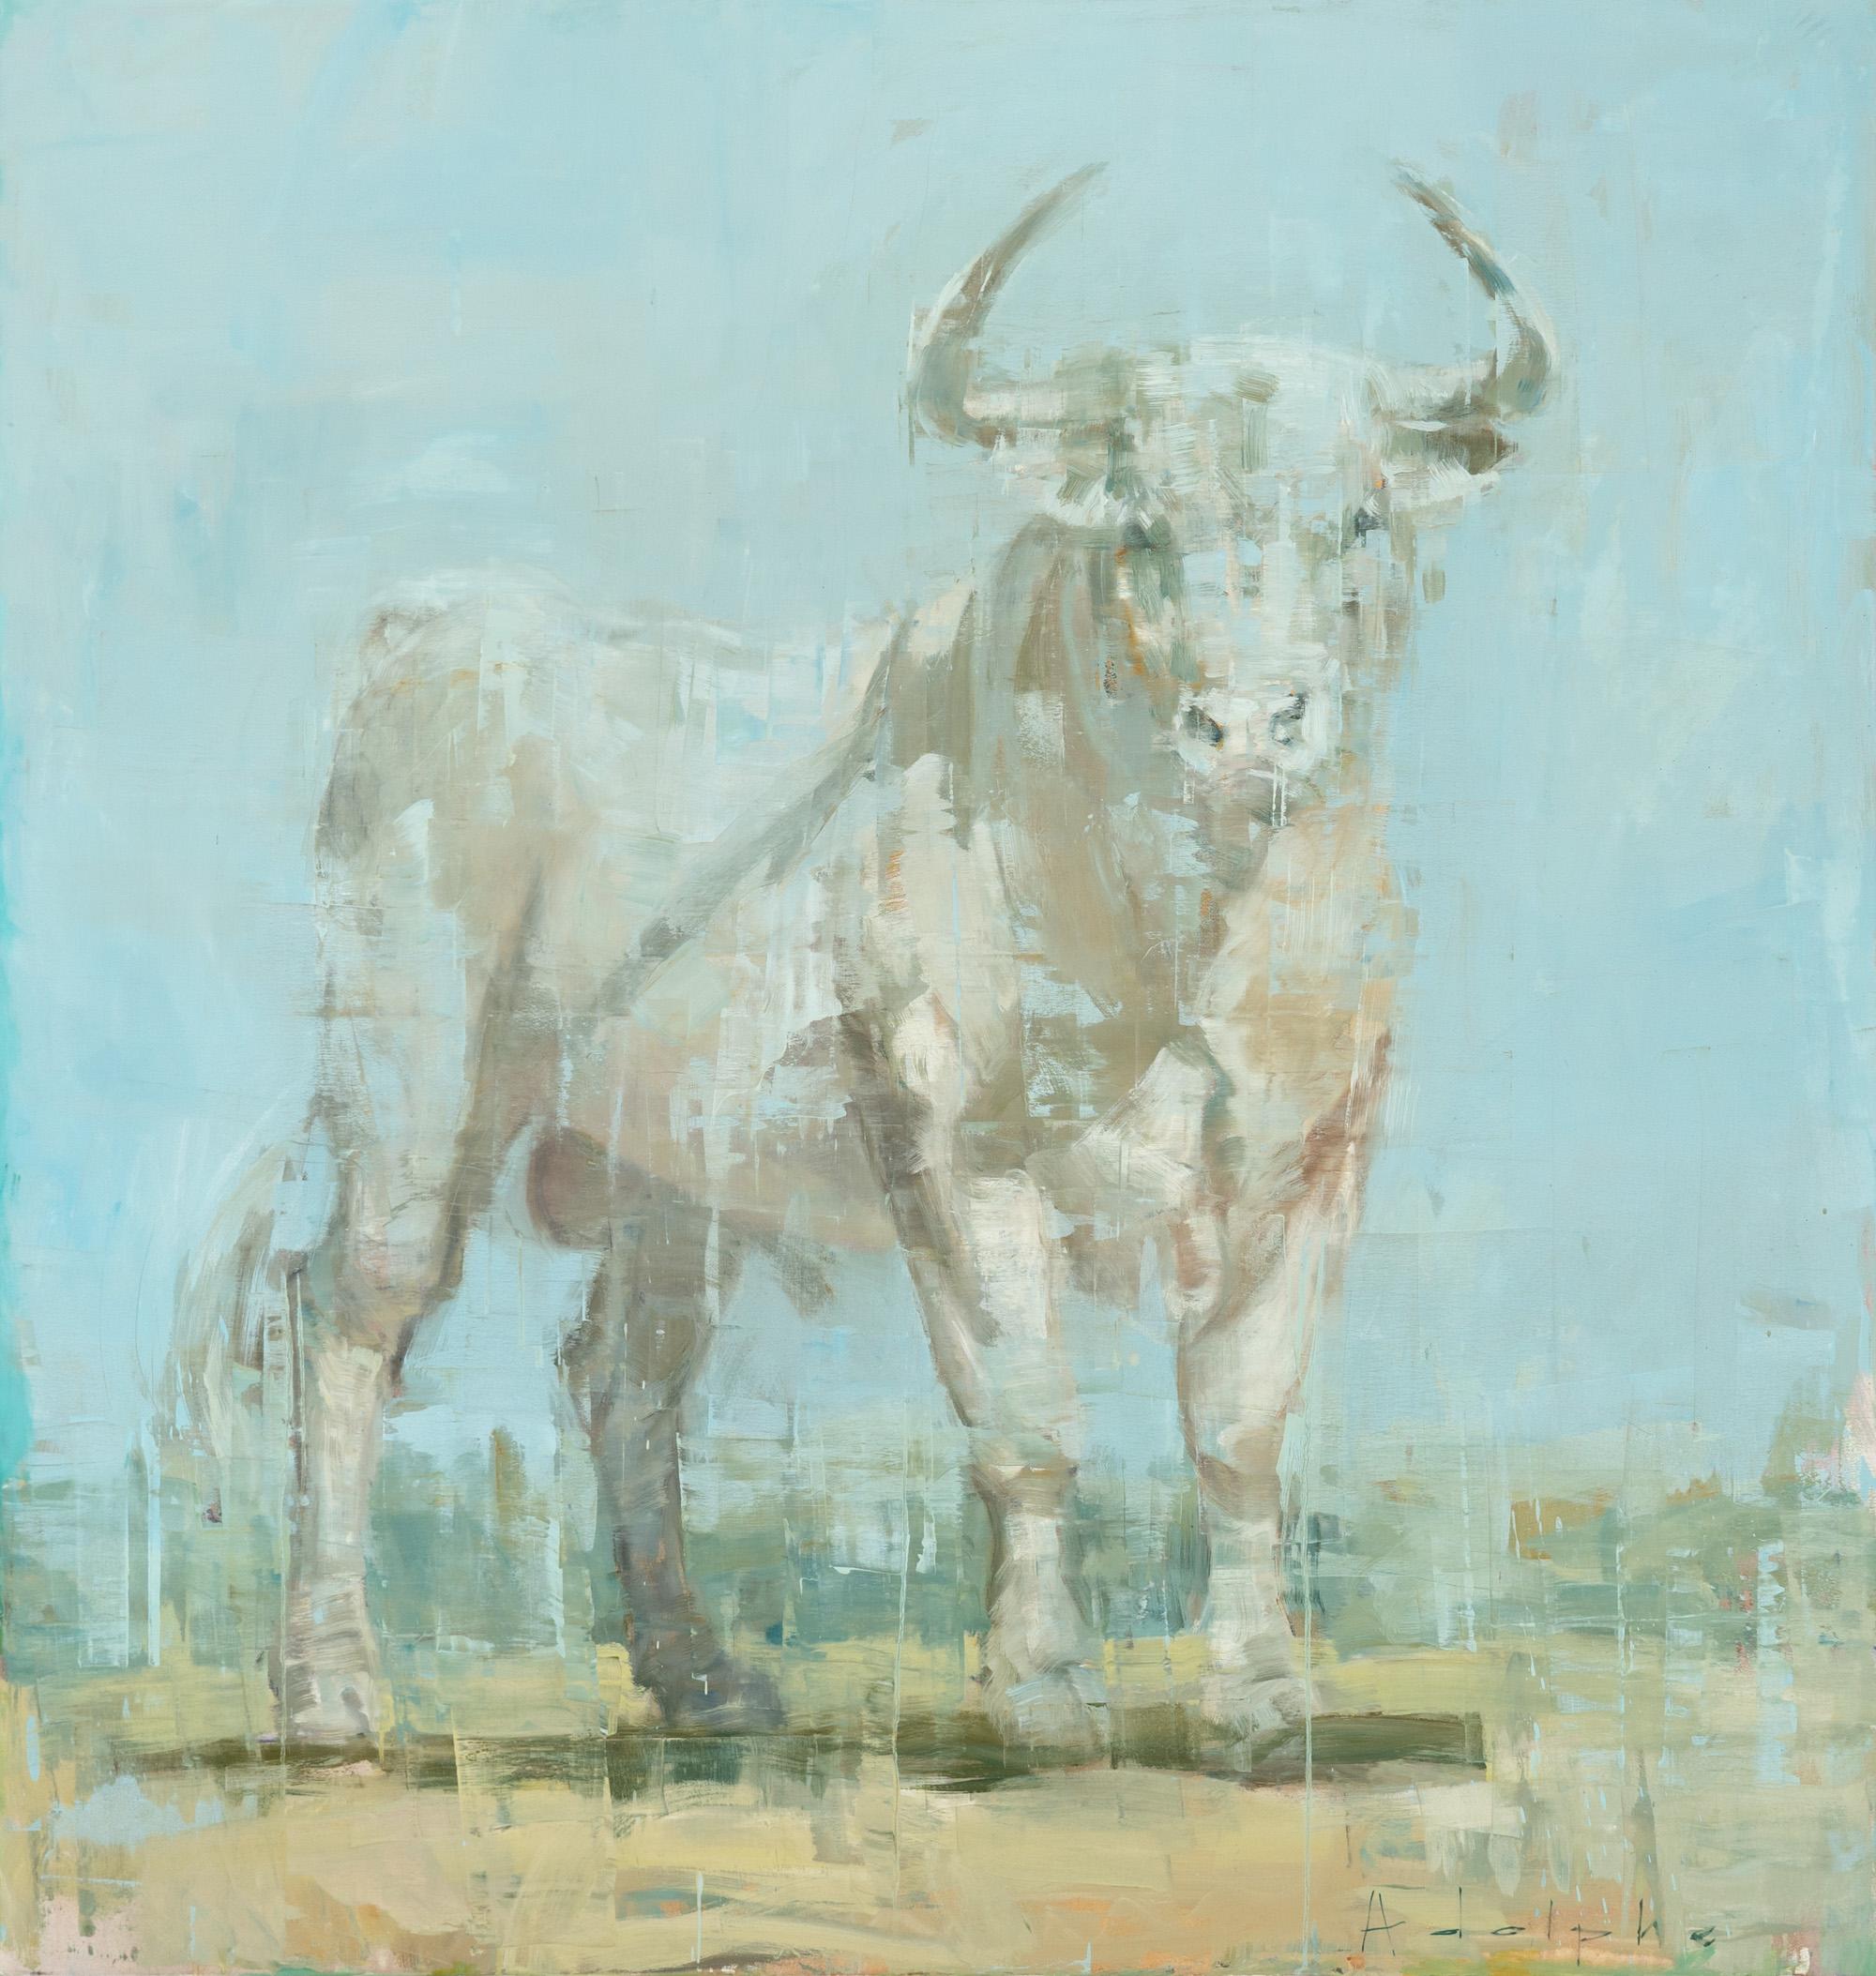 Joseph Adolphe Animal Painting - "Toro Blanco No. 2" Abstract Bull Portrait Oil on Canvas Painting